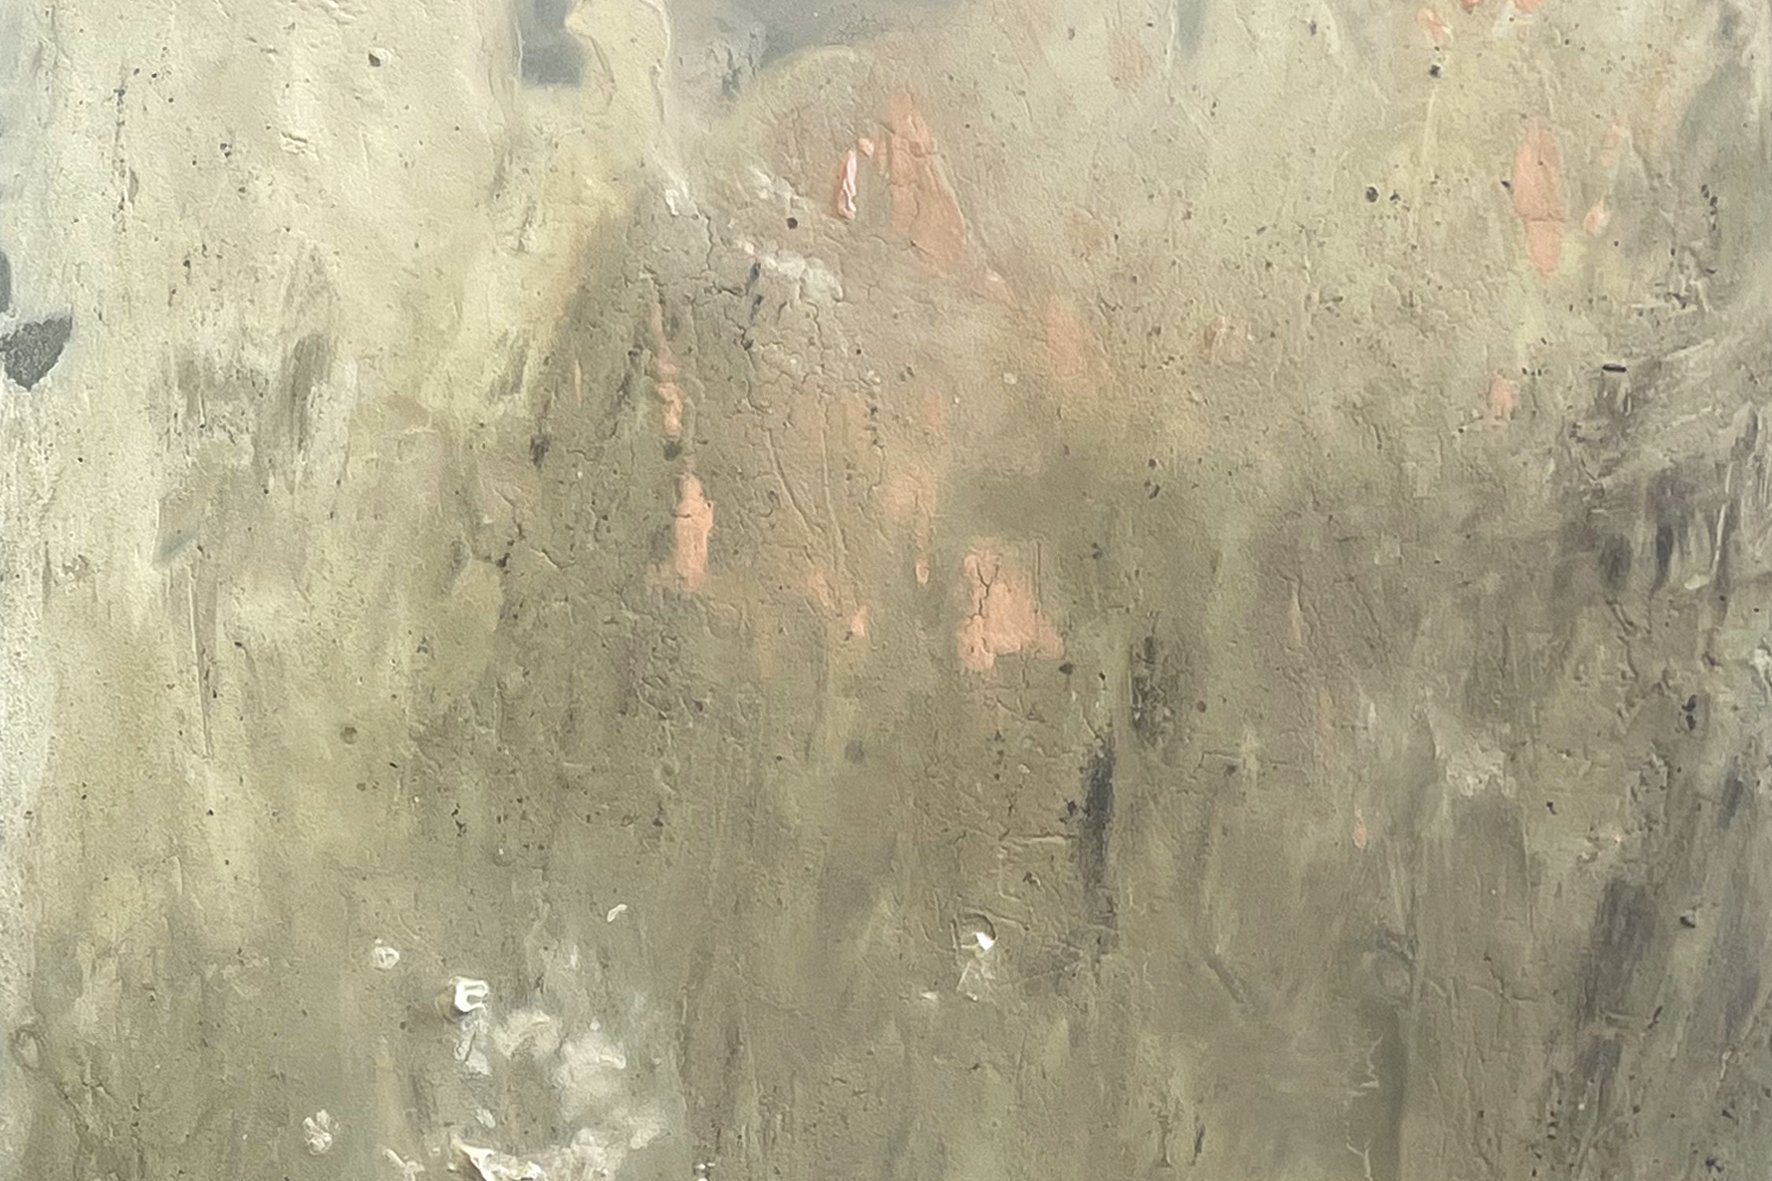 KaraBurrowes-painting-circle-brown-pink-sludge-detail2-LR.jpg